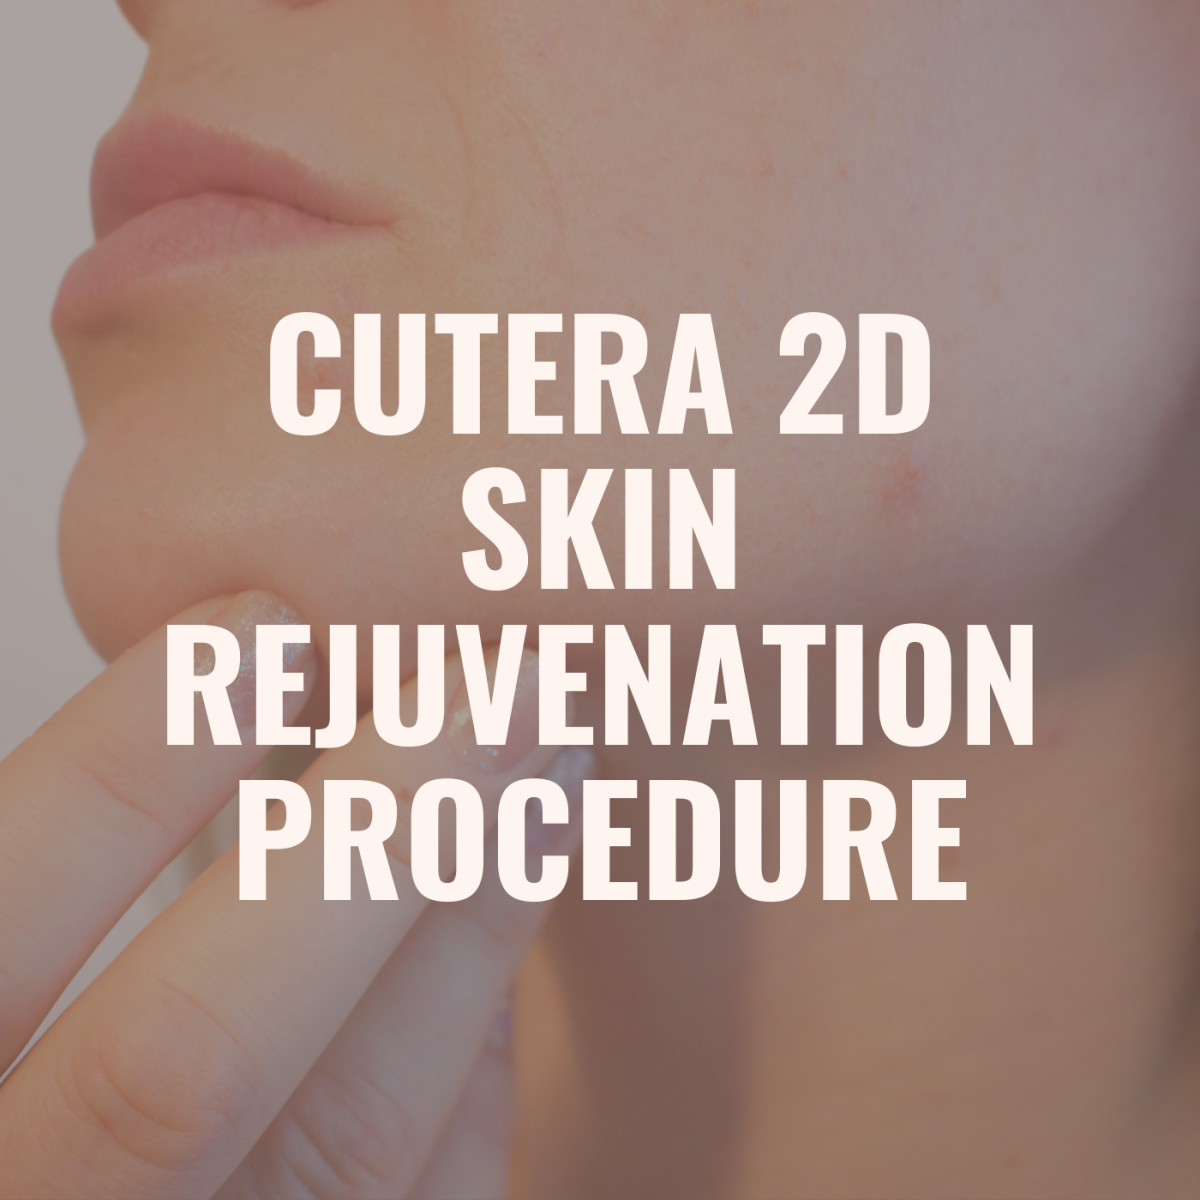 Review of Cutera 2D Skin Rejuvenation Procedure